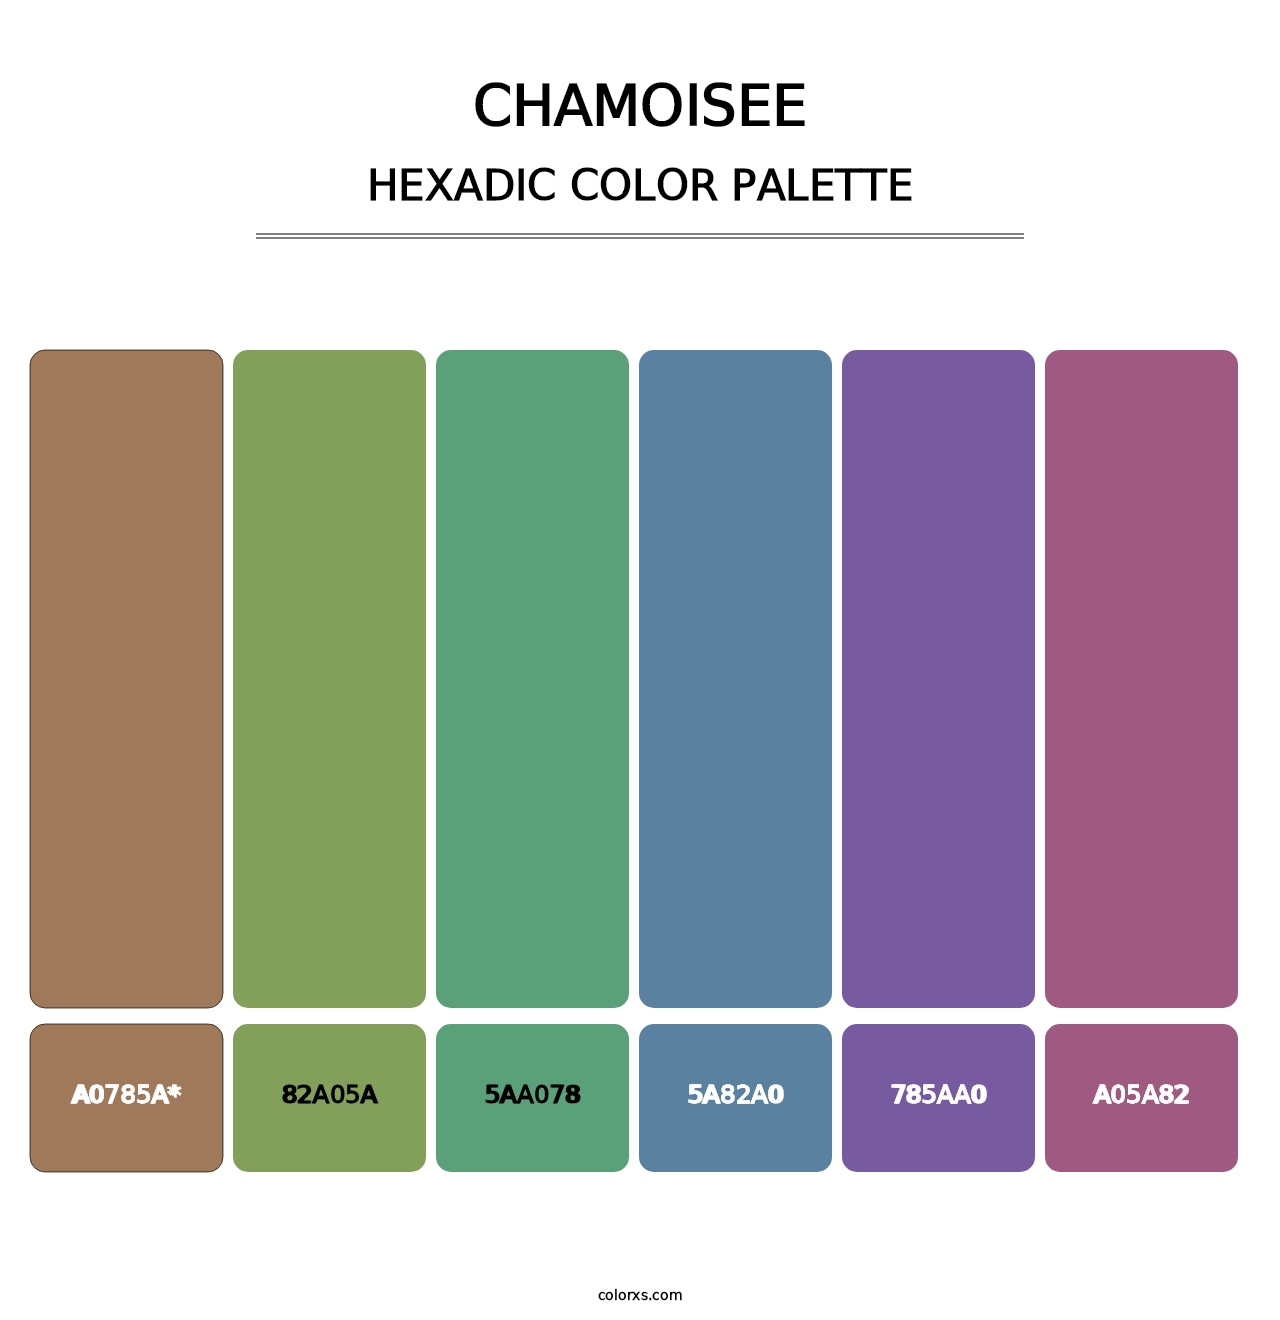 Chamoisee - Hexadic Color Palette